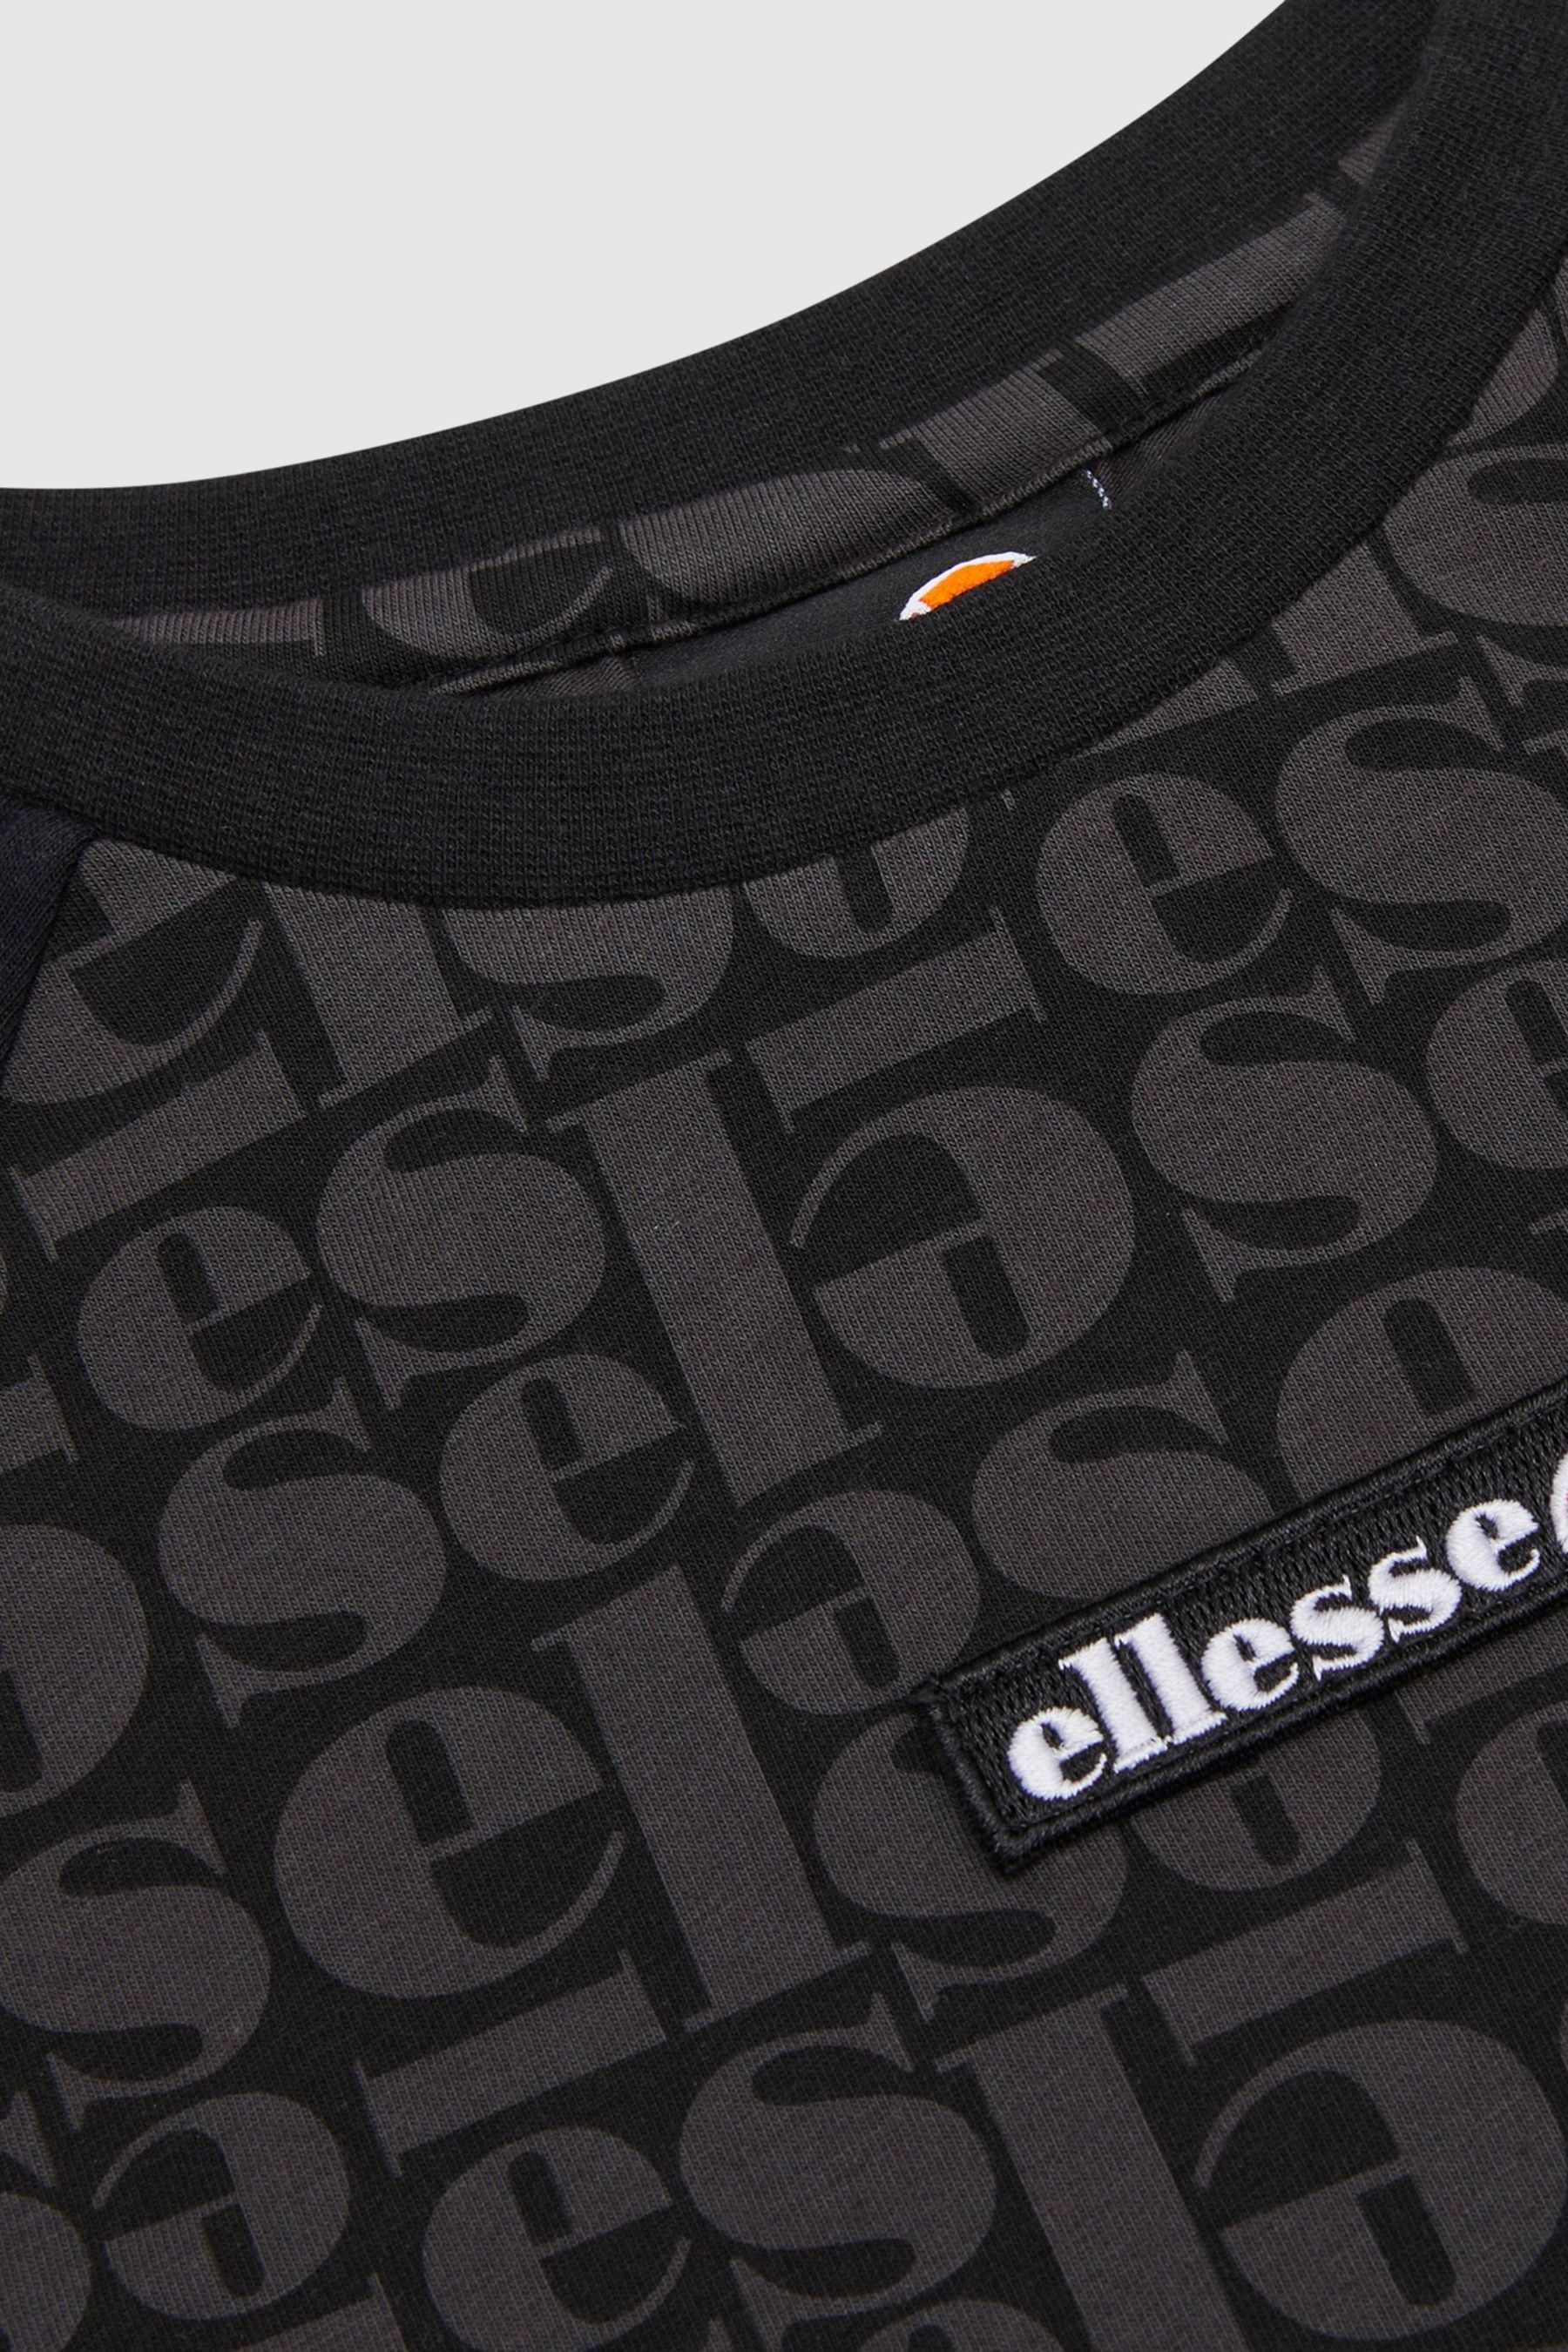 Buy Ellesse Junior Bufaloro Black T-Shirt from the Next UK online shop